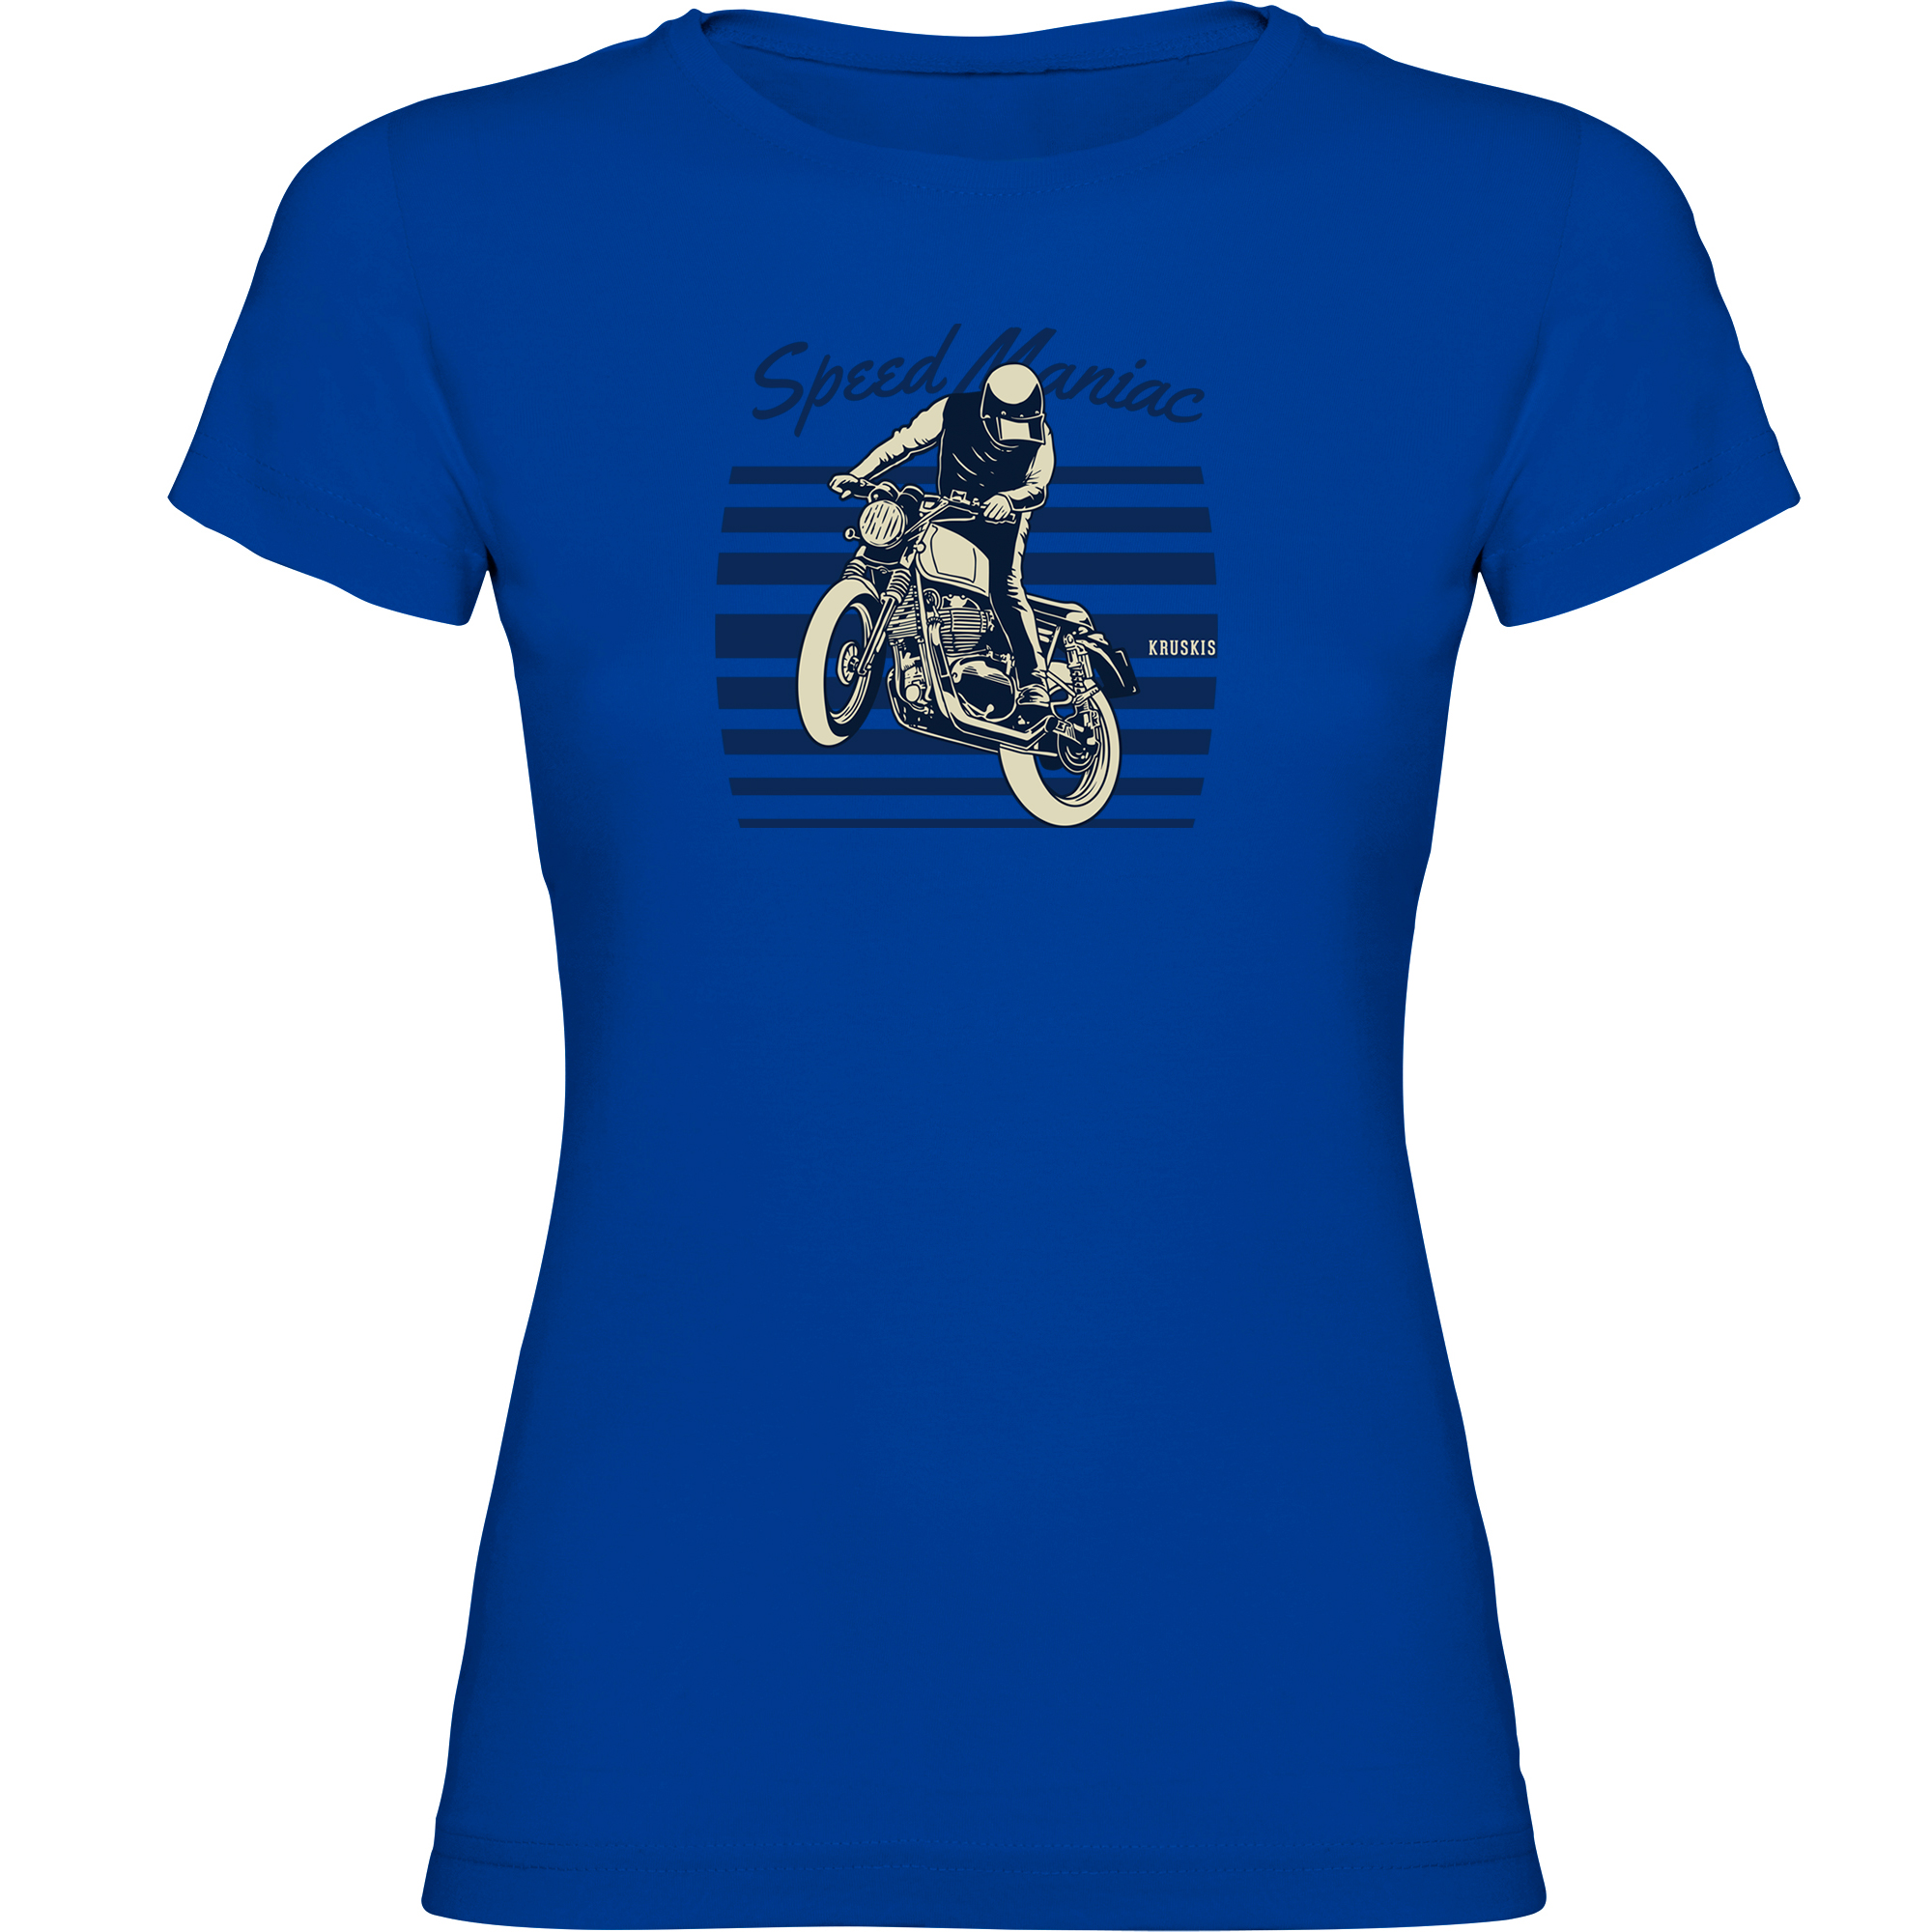 T shirt Motorcycling Speed Maniac Short Sleeves Woman